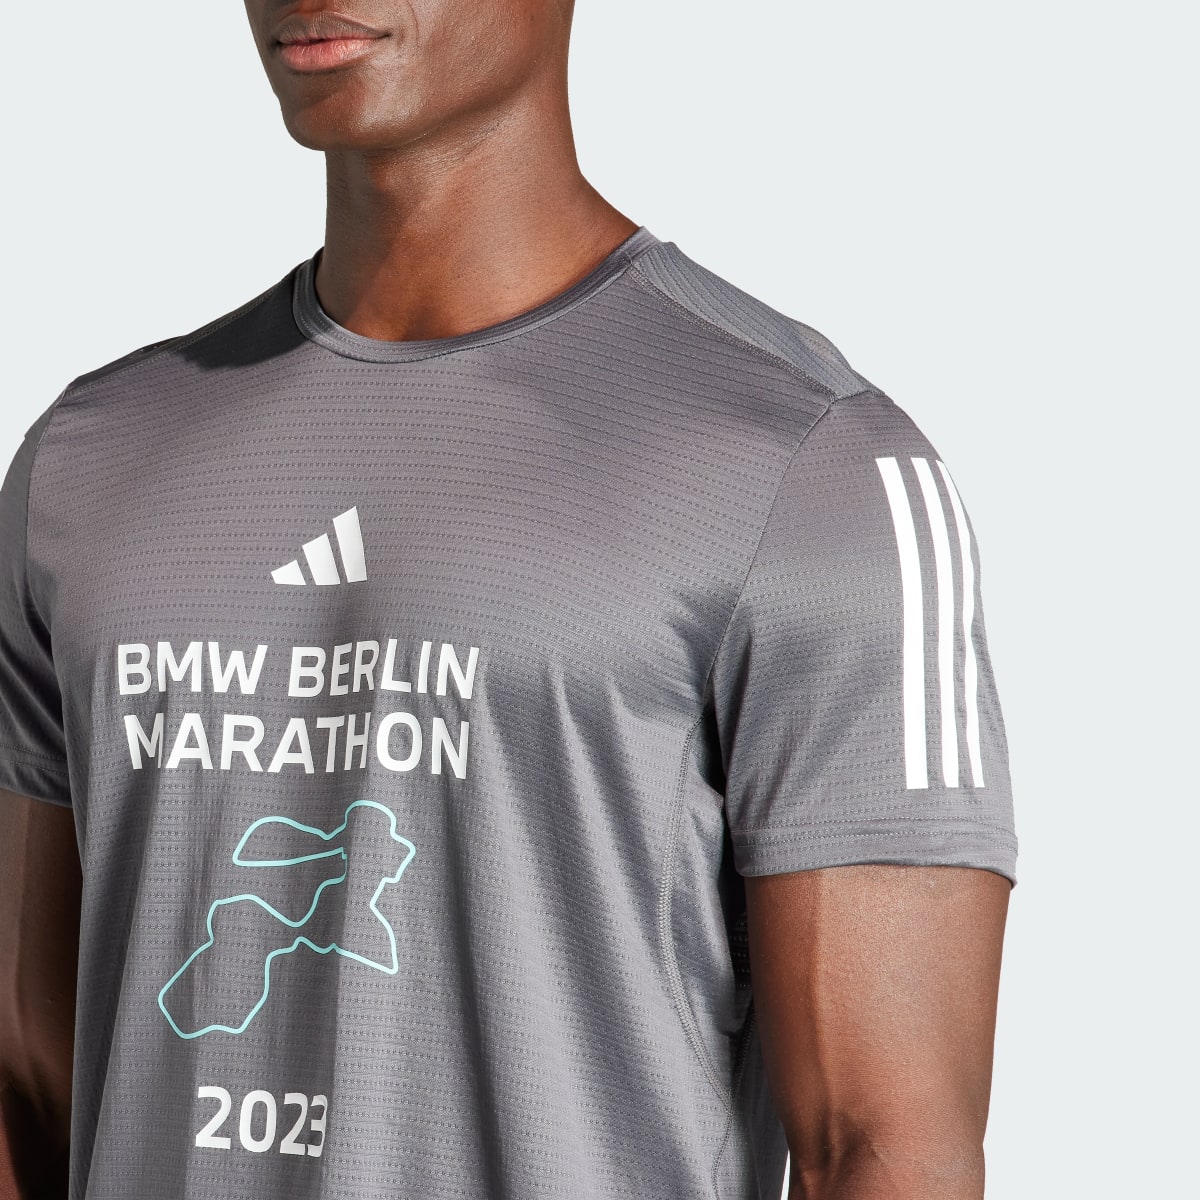 Adidas T-shirt Event da BMW BERLIN-MARATHON 2023. 6